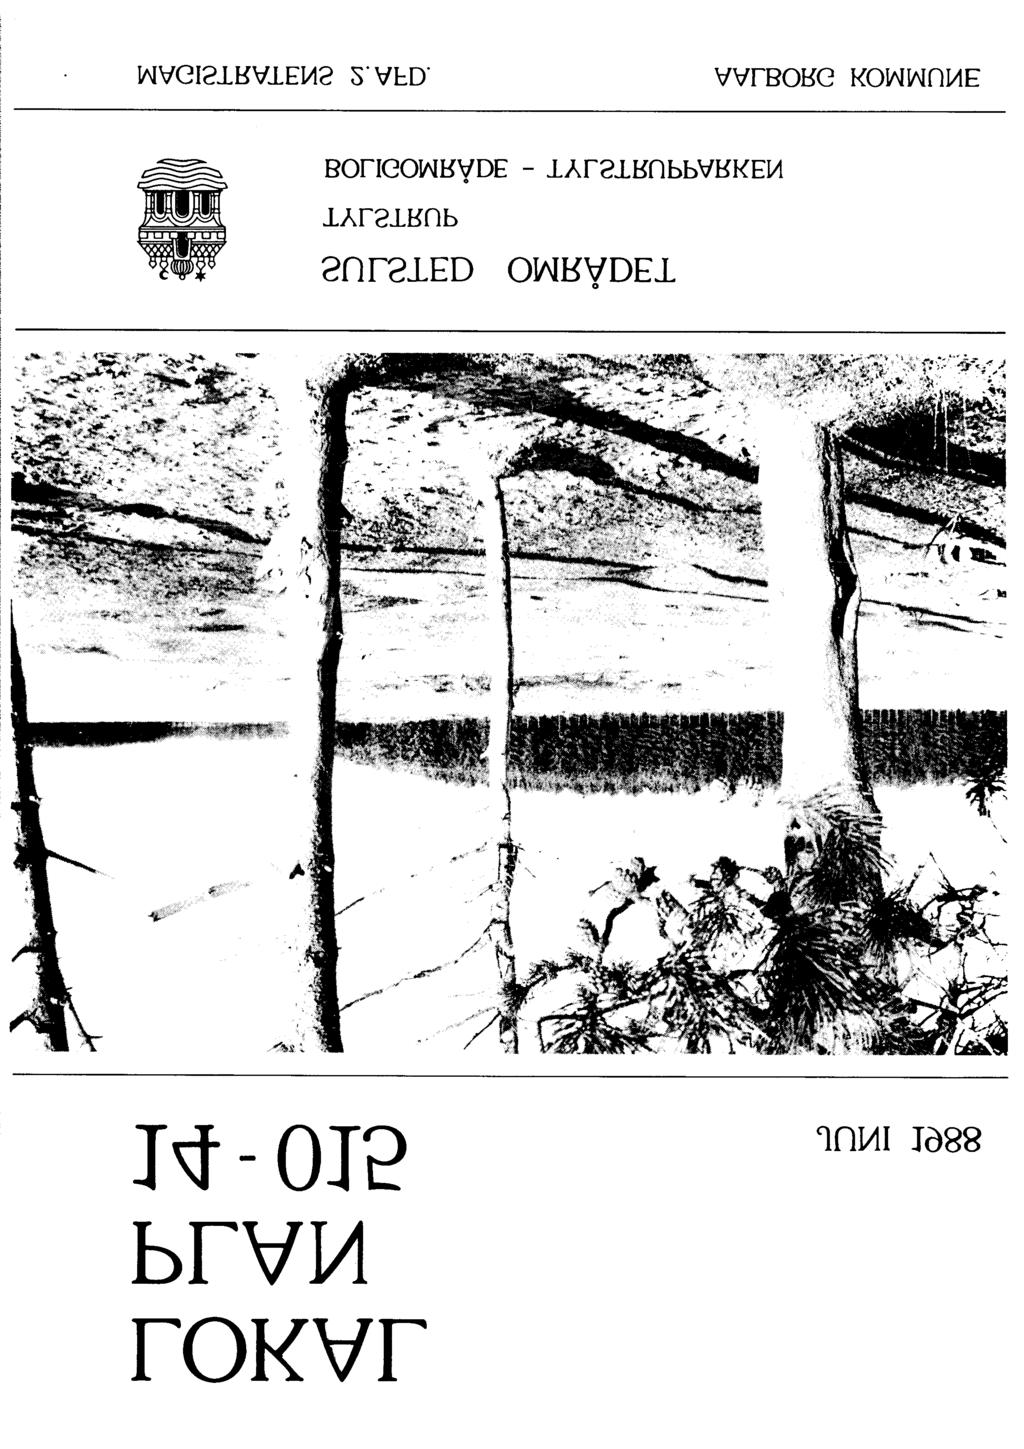 LOKAL PLAN 14-015 JUNI 1988 SULSTED TYLSTRUP OMRÅDET